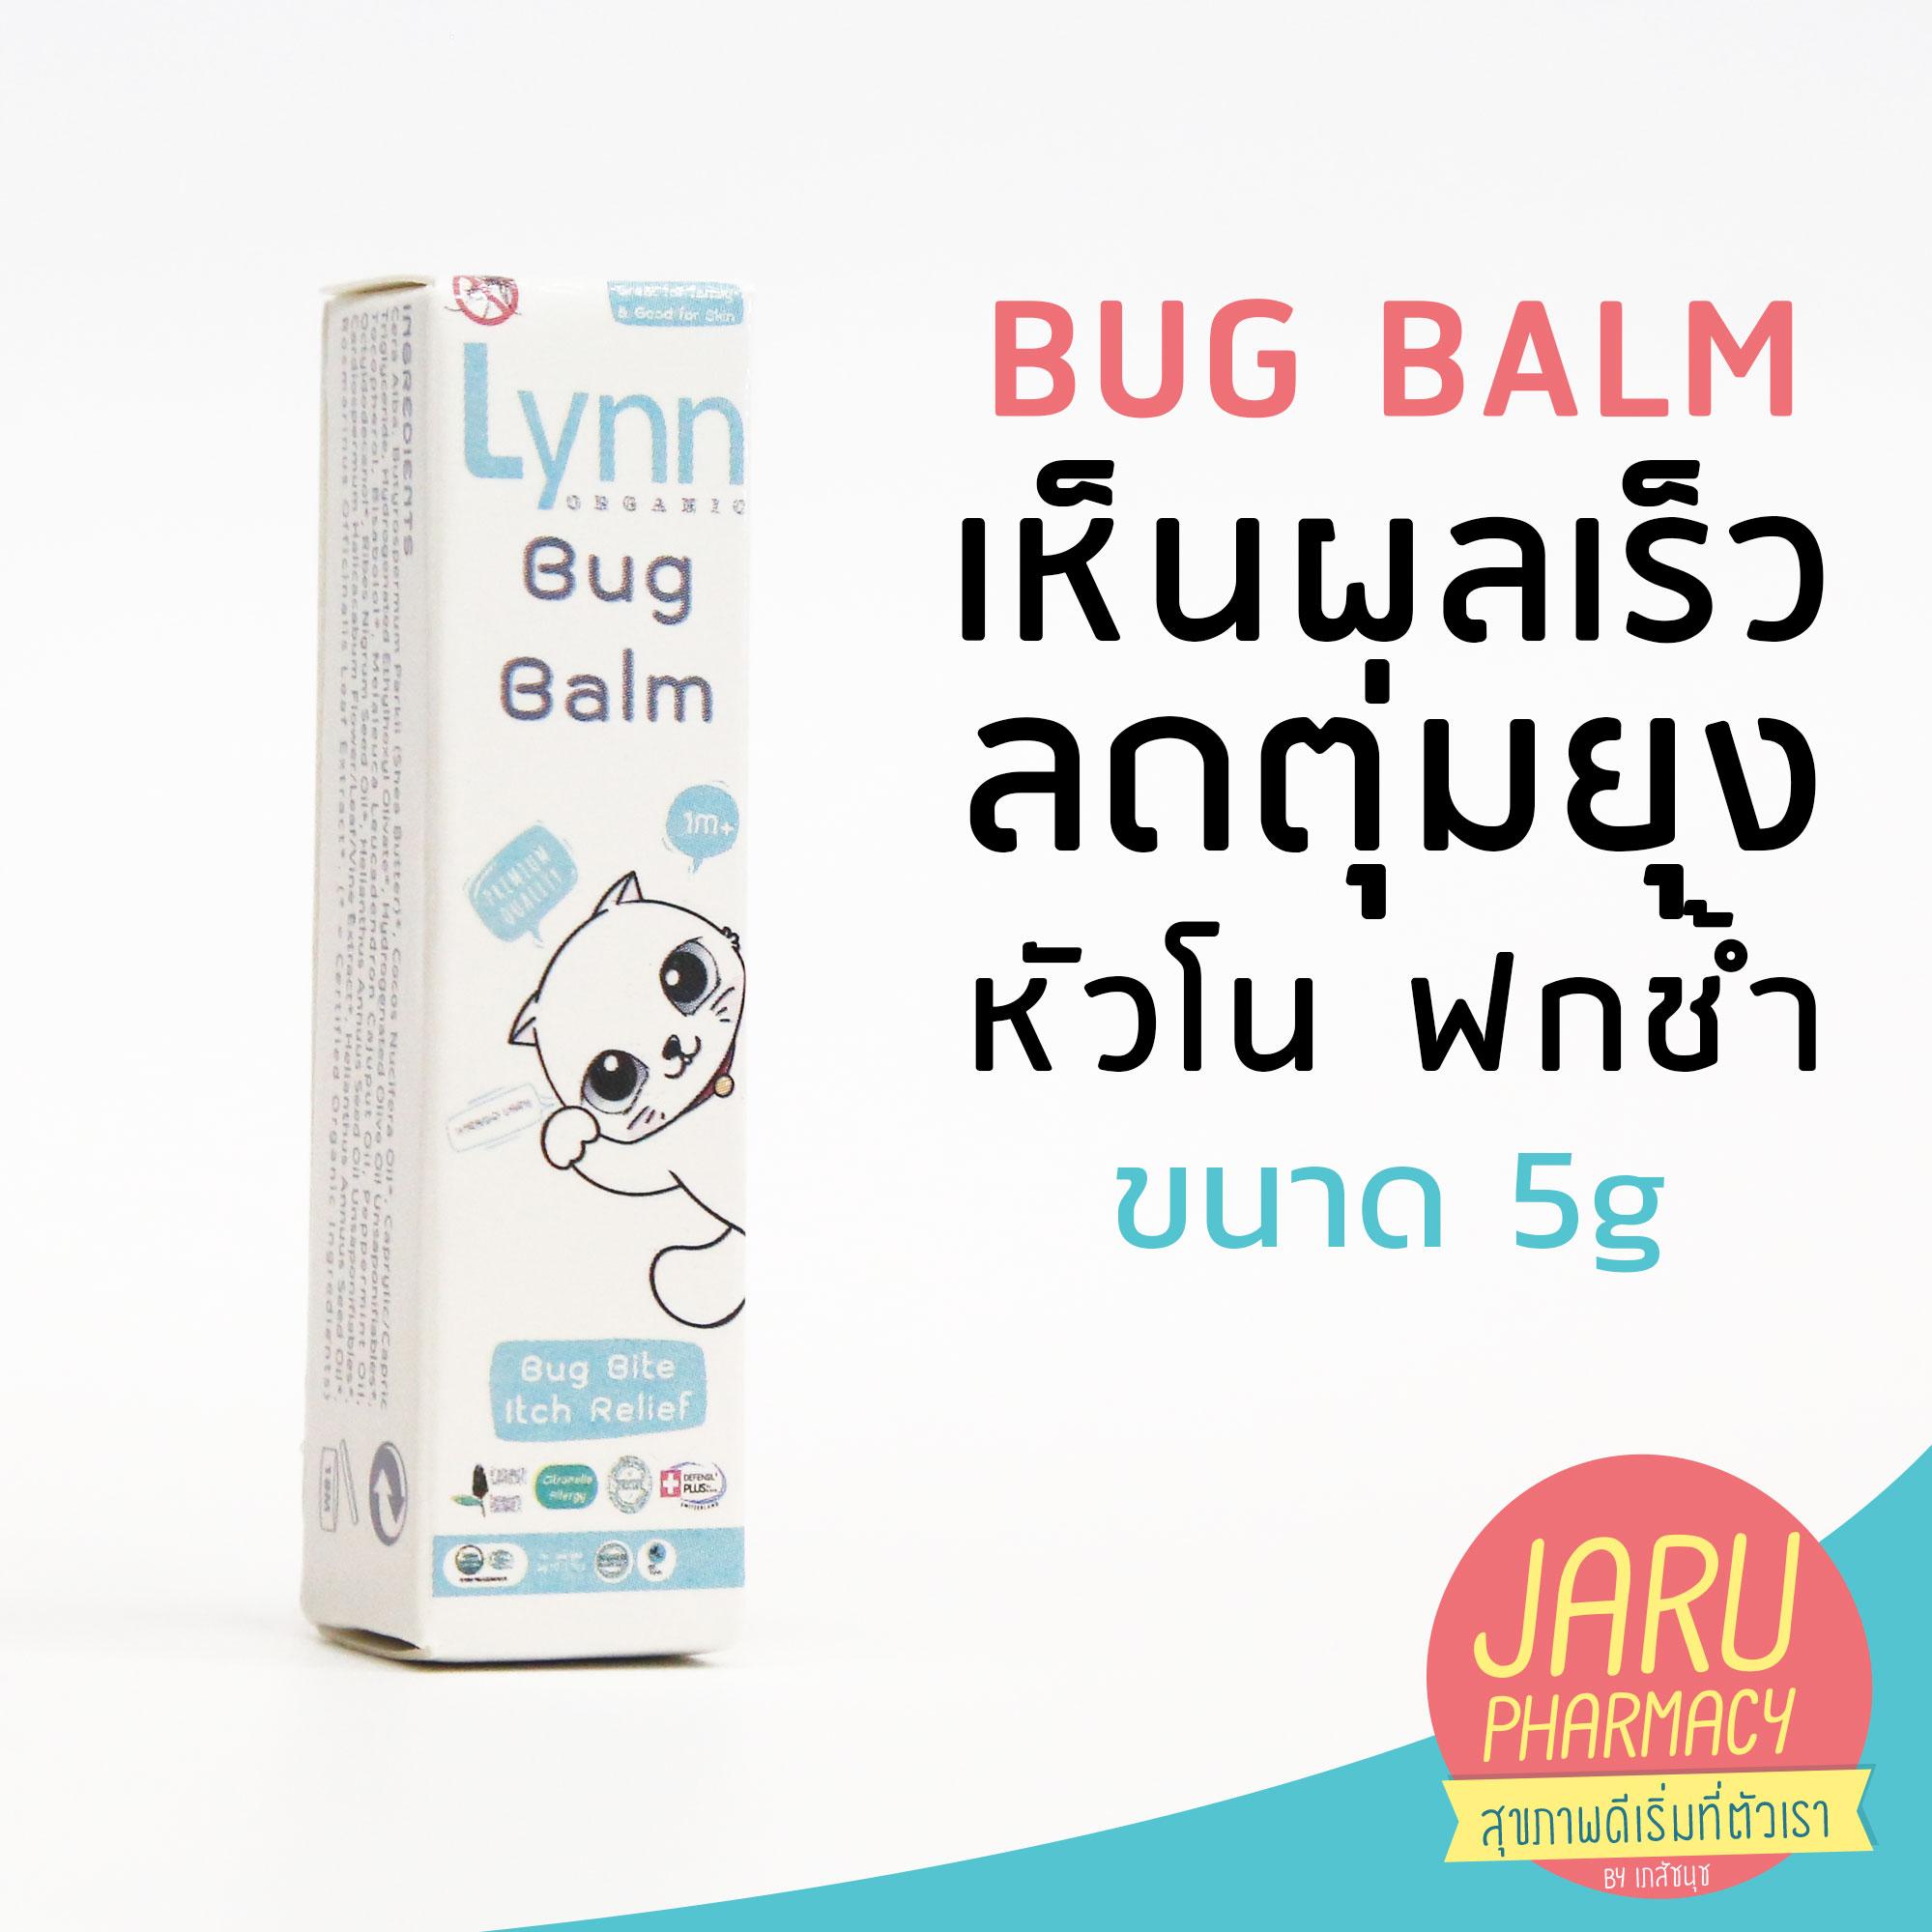 Lynn Organic bug balm ทาหลังยุงและแมลงกัด ช่วยซ่อมผิวเก่า สมานผิวใหม่ ฟื้นฟู ไม่ทิ้งรอยดำ ขนาด 5 g